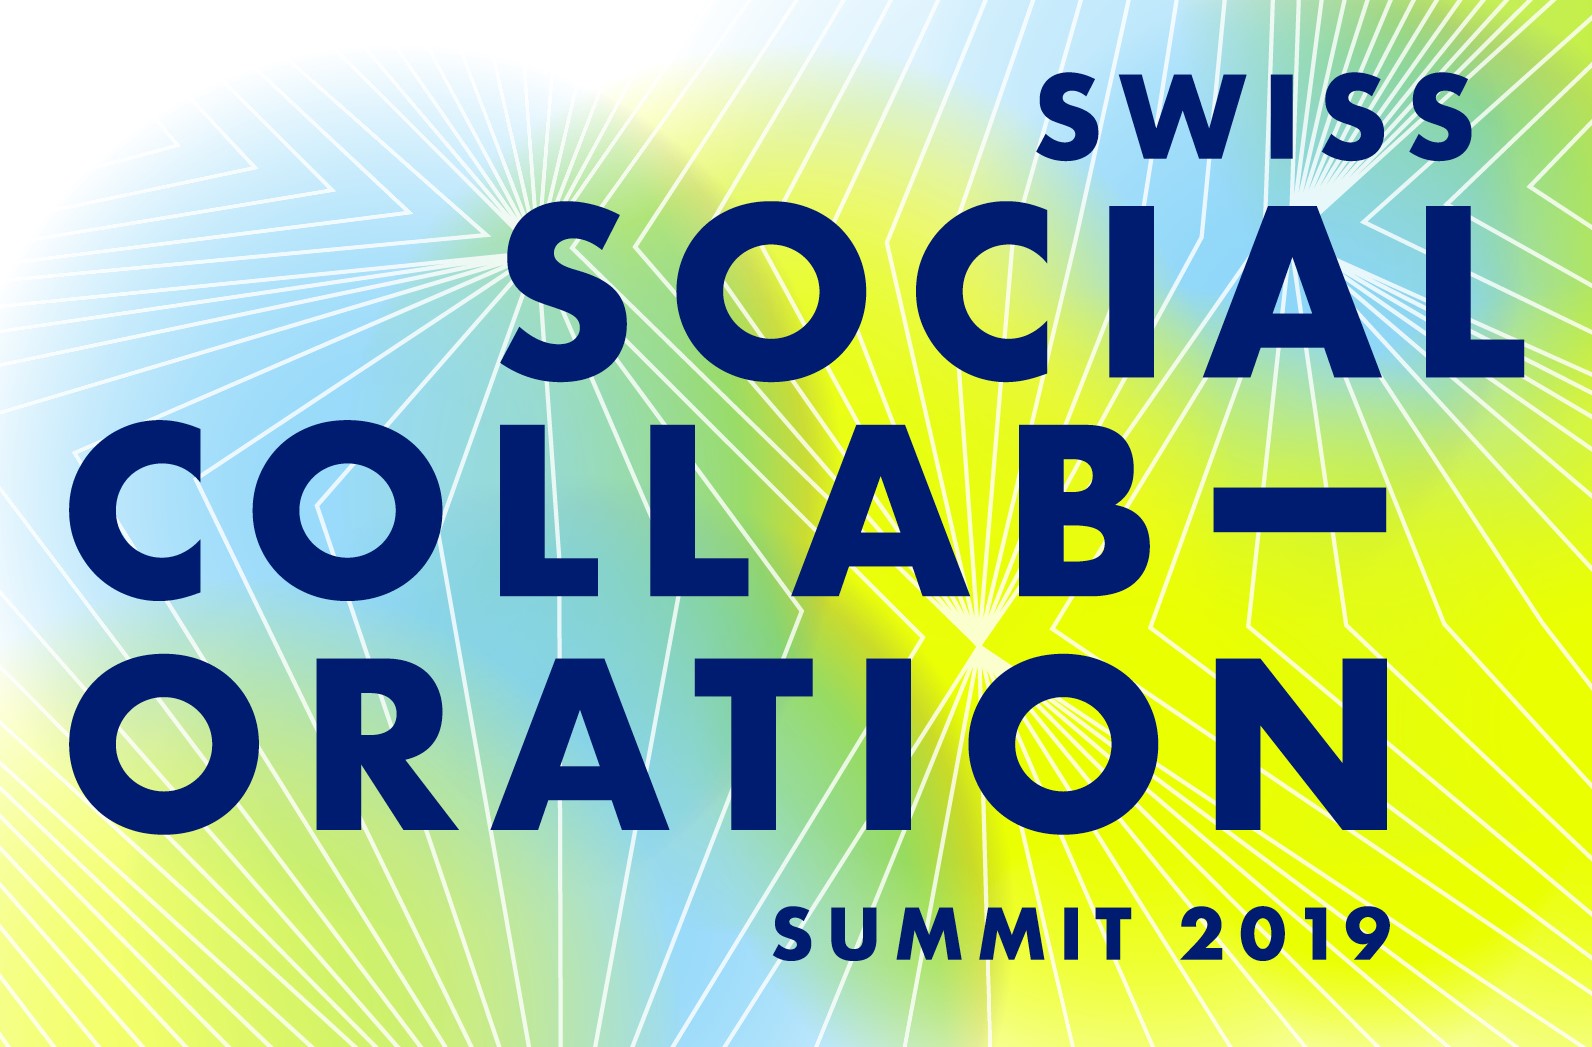 Swiss Social Collaboration Summit